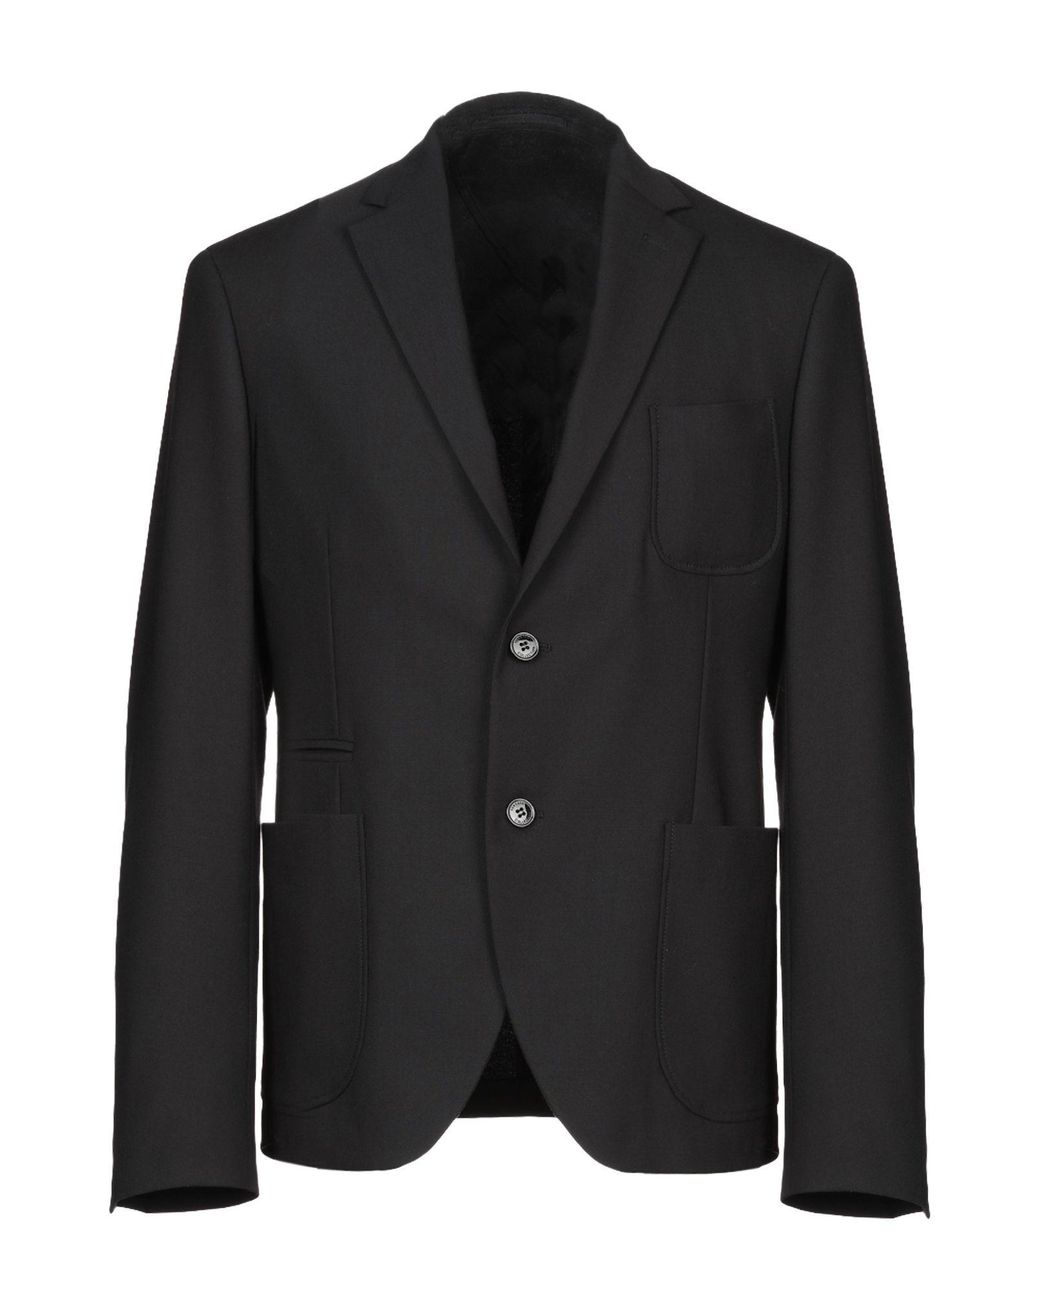 Versace Blazer in Black for Men - Lyst